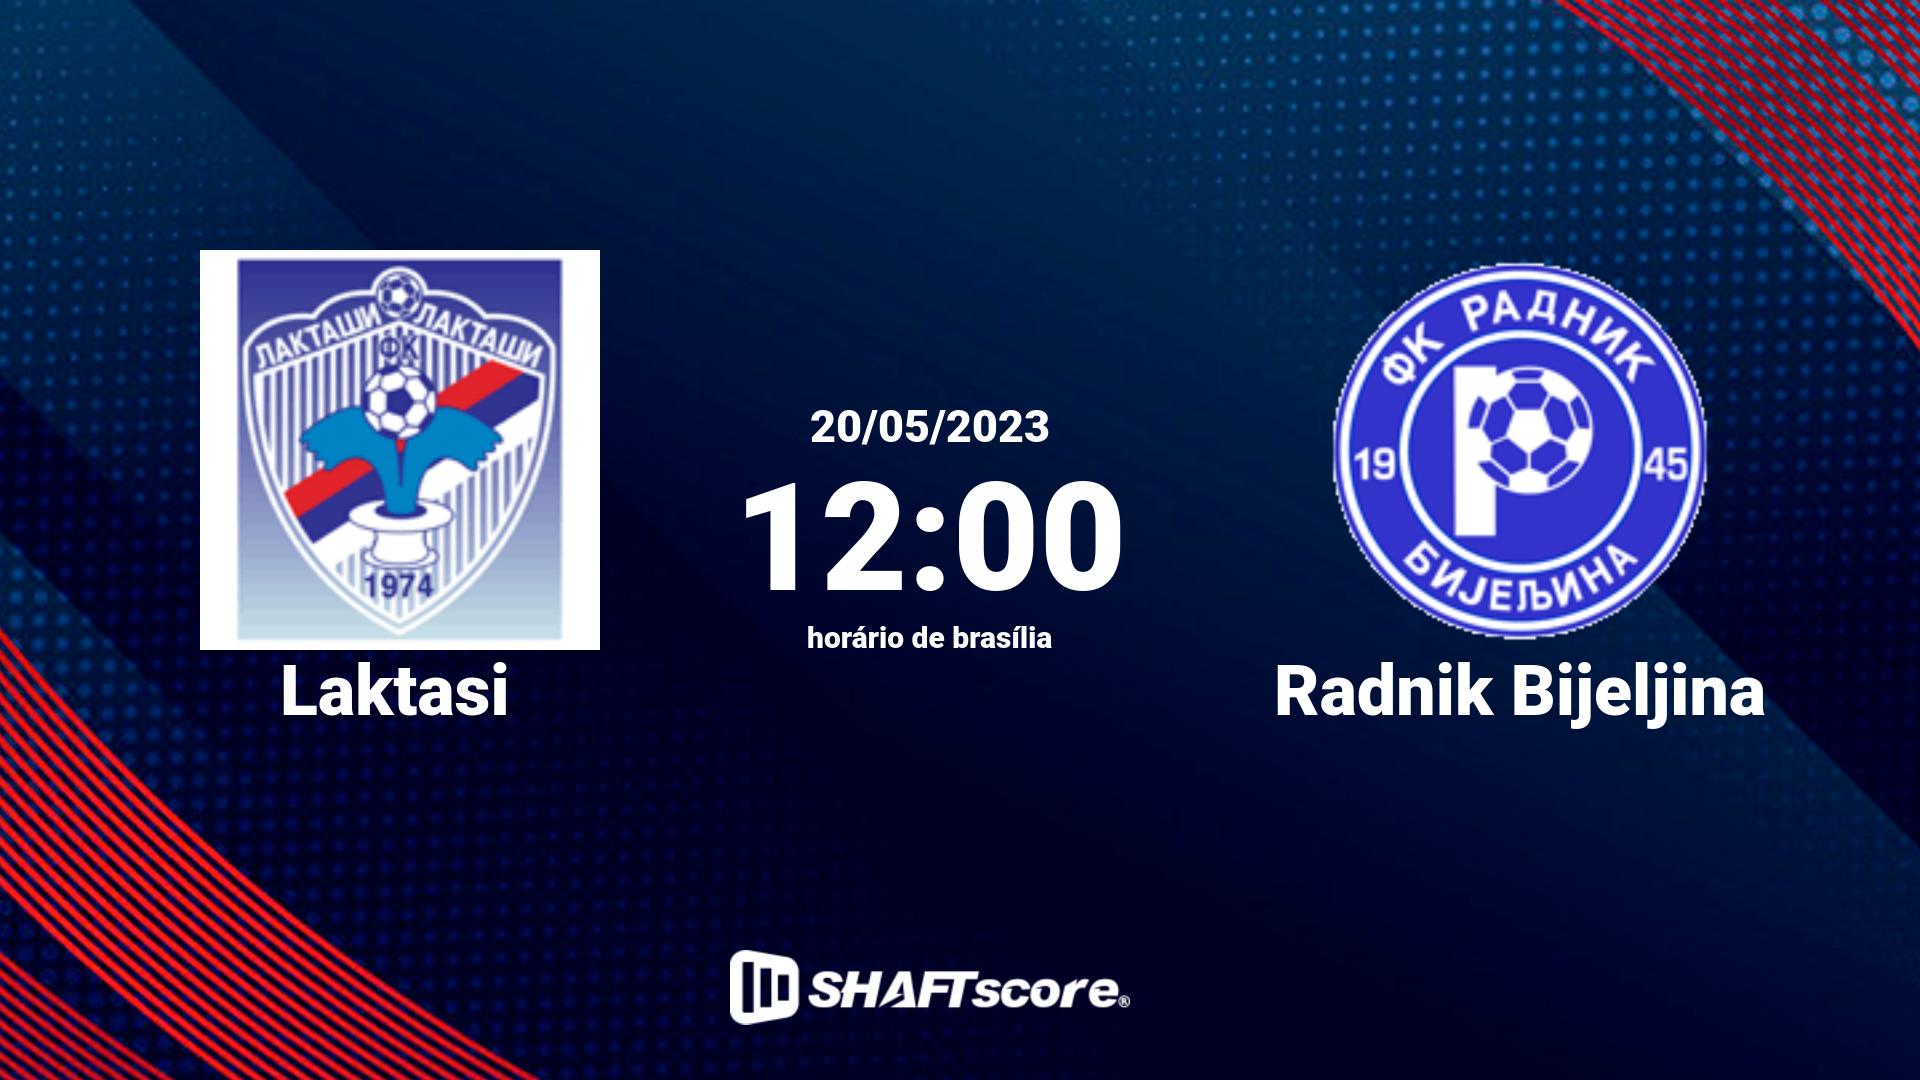 Estatísticas do jogo Laktasi vs Radnik Bijeljina 20.05 12:00